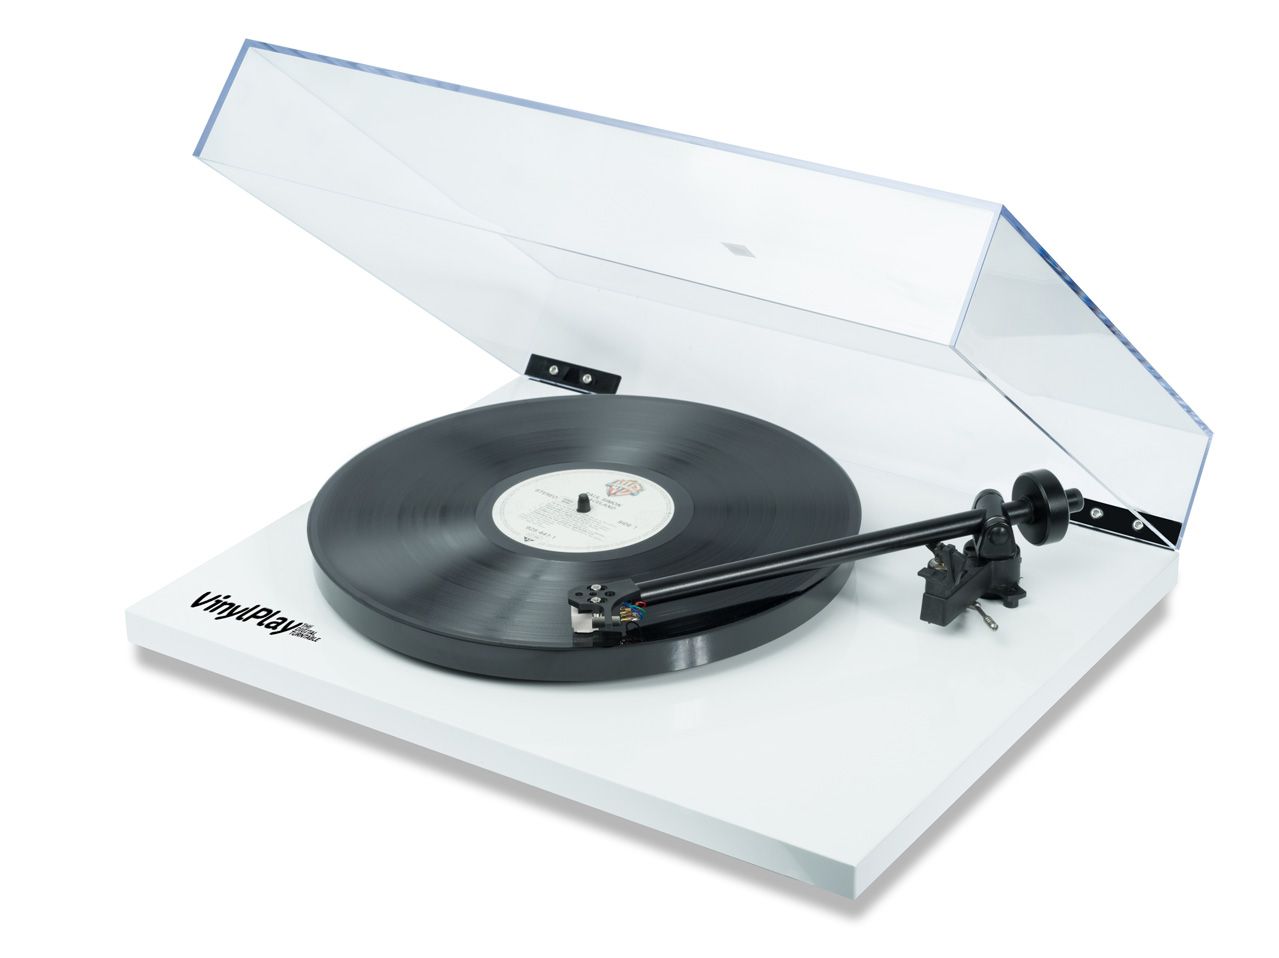 flexson vinylplay digital turntable works with sonos to stream records around the home image 1